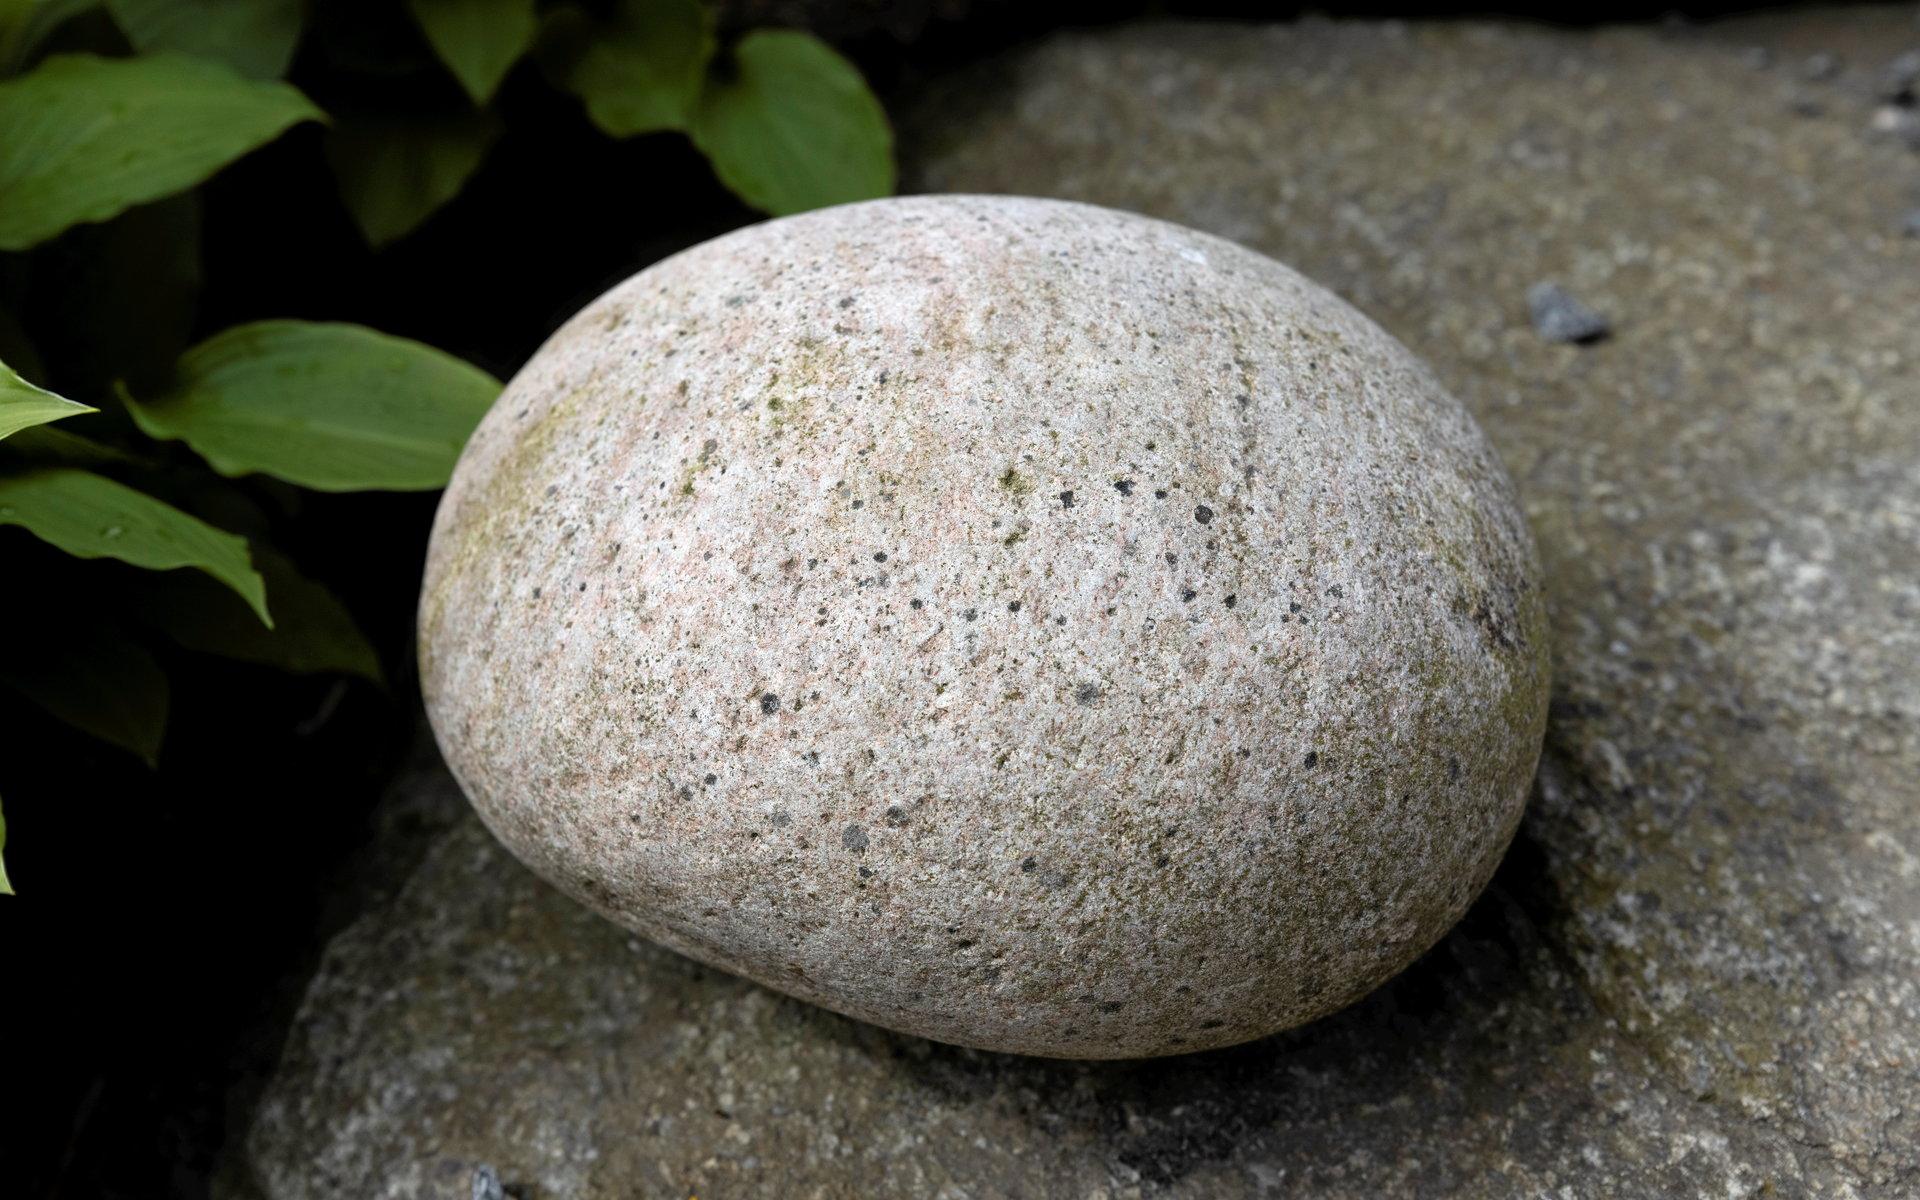 En rund sten blir en prydnad i sig.